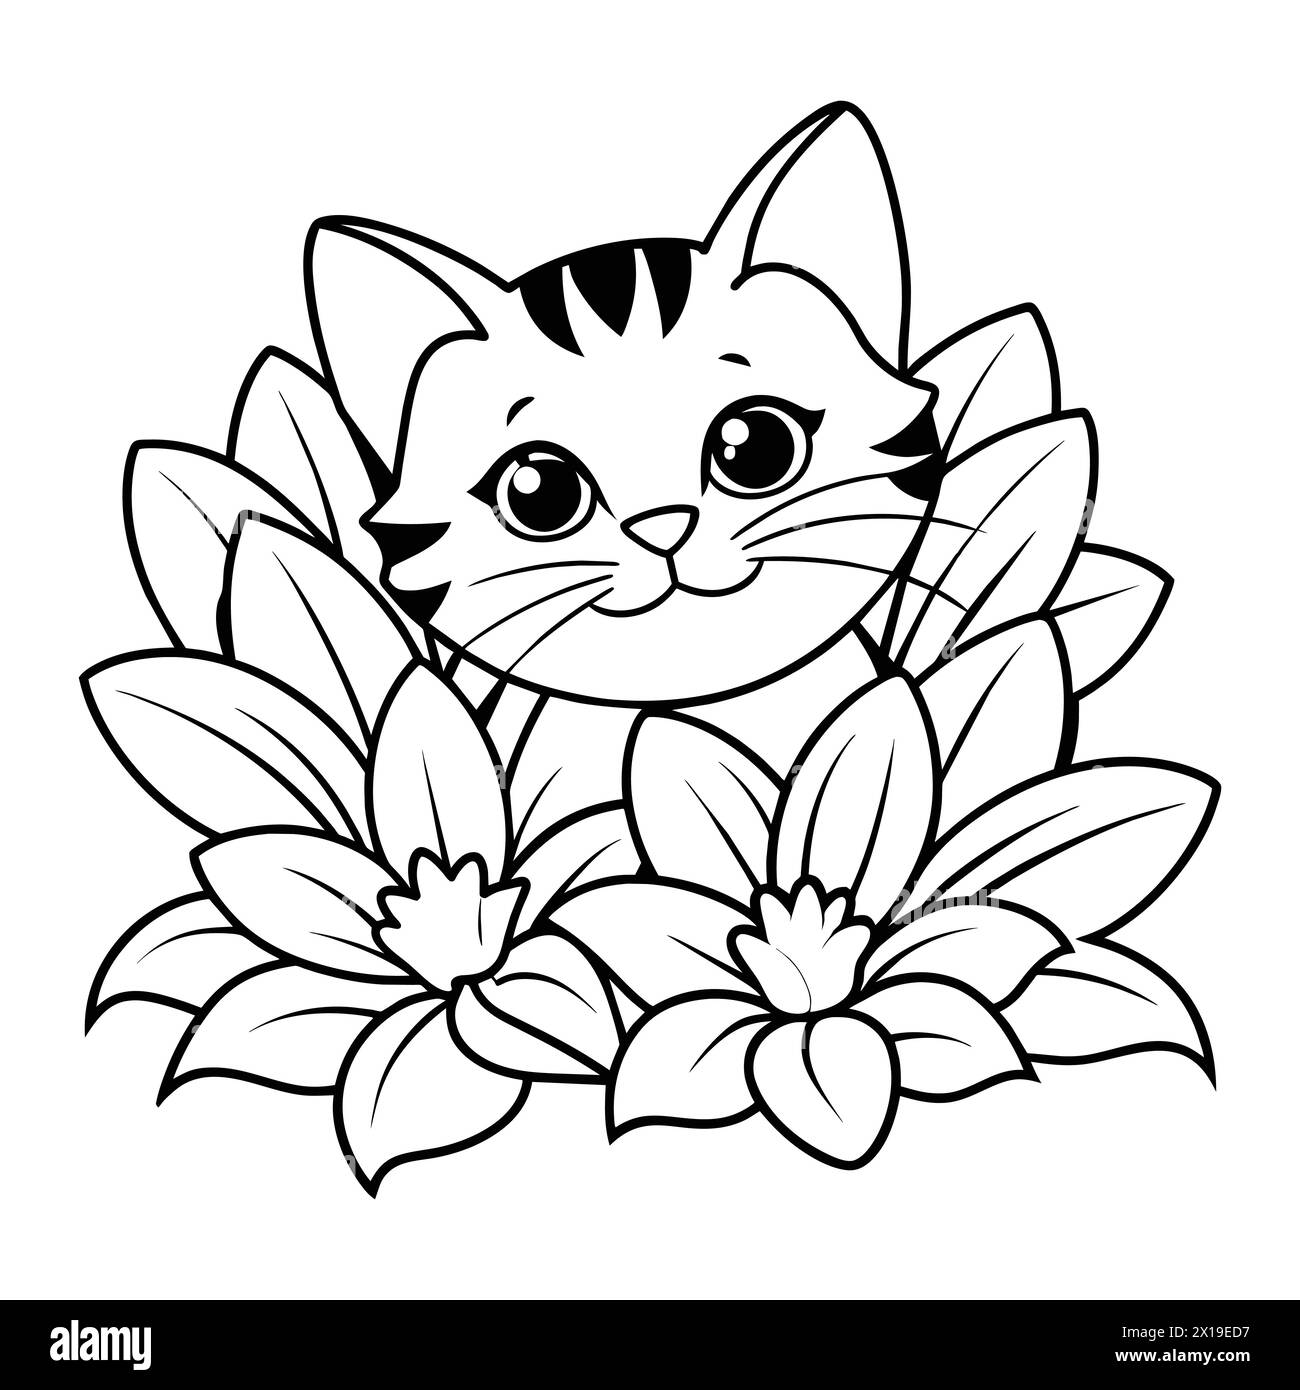 'Adorable Feline Frolic: Playful Kitty Hiding Among Blossoms Sparks Joy' Stock Vector